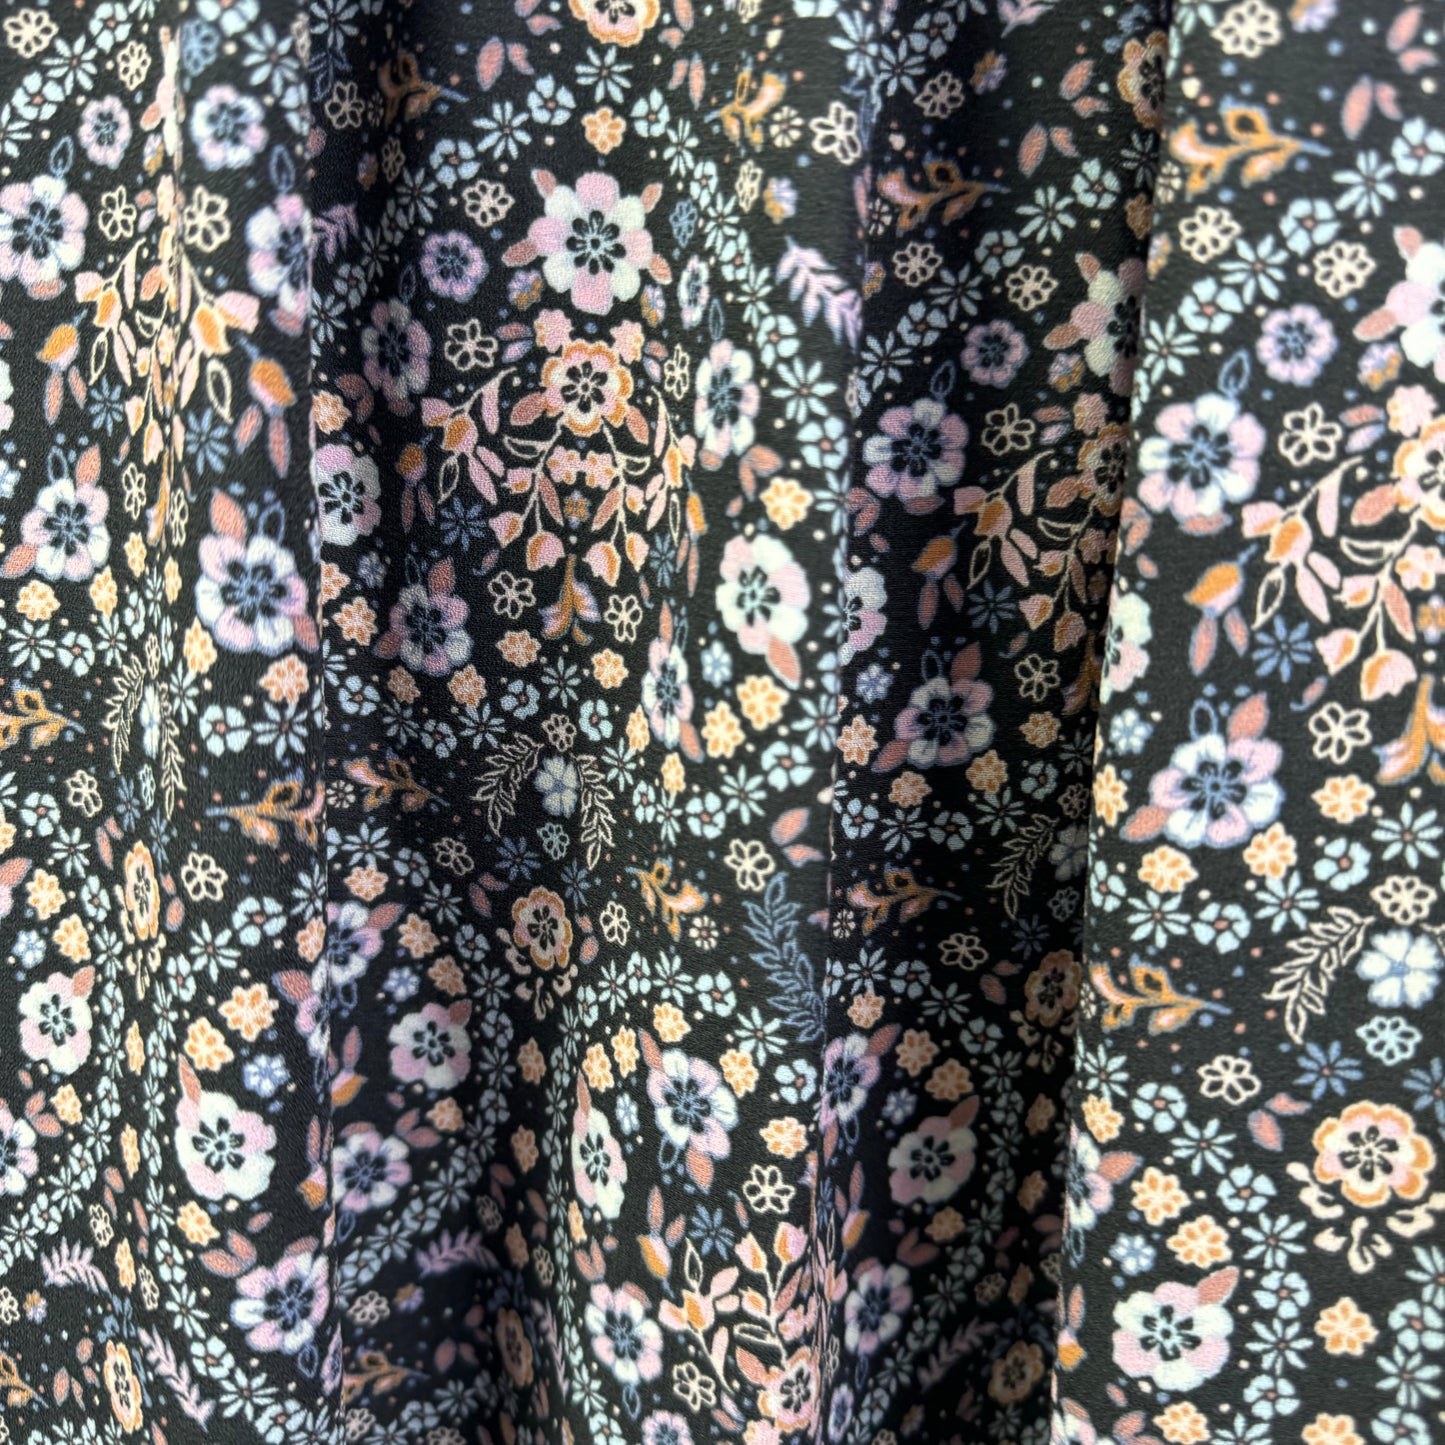 Floral Print Top Short Sleeve lauren conrad, Size 2x